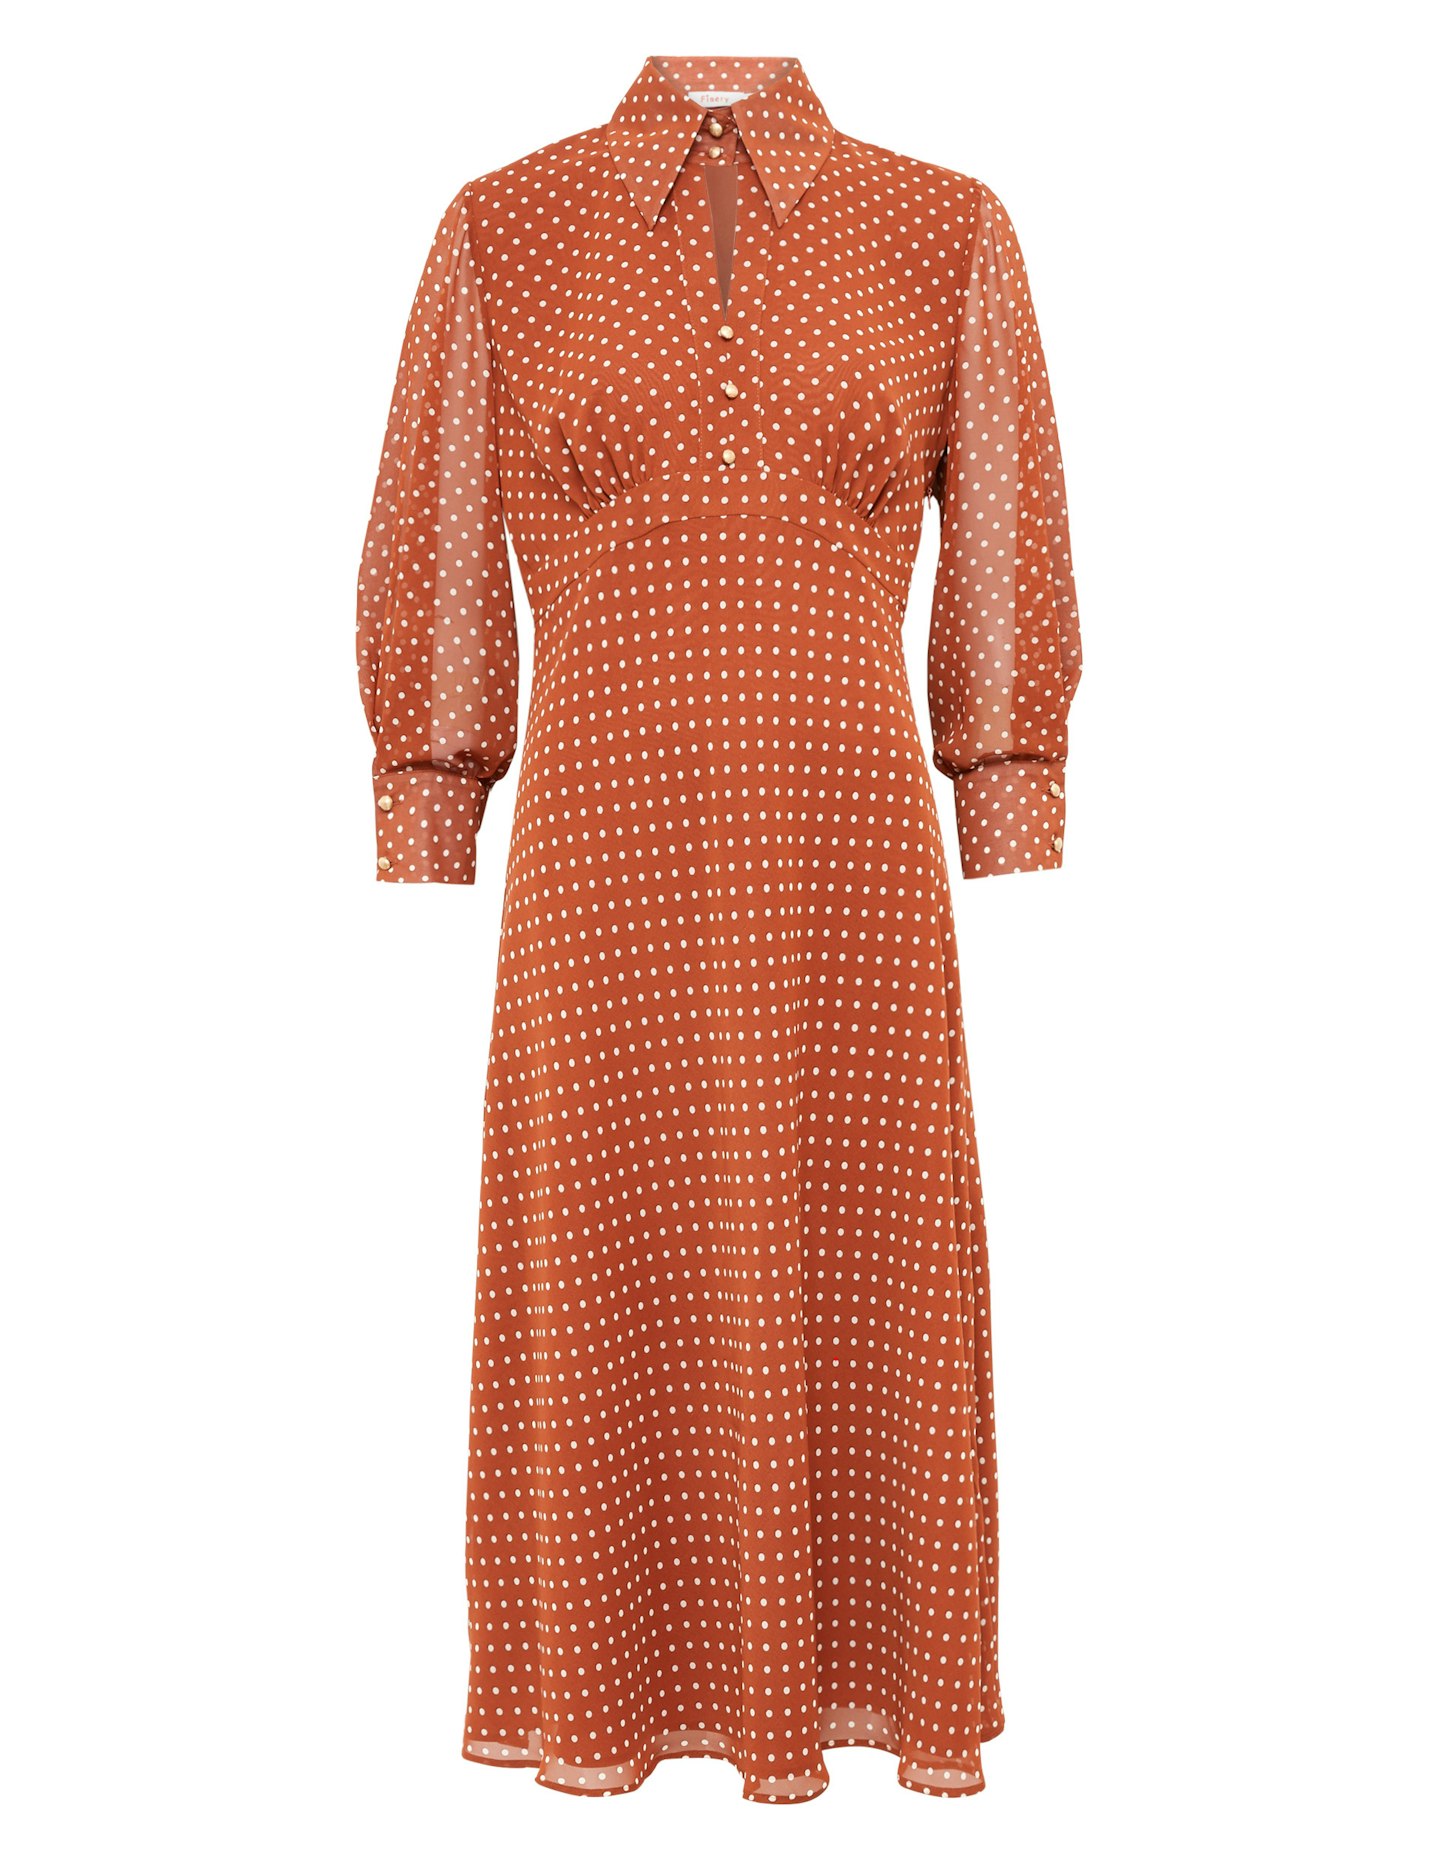 Finery London, Chiffon Polka Dot Collared Midi Tea Dress, £79